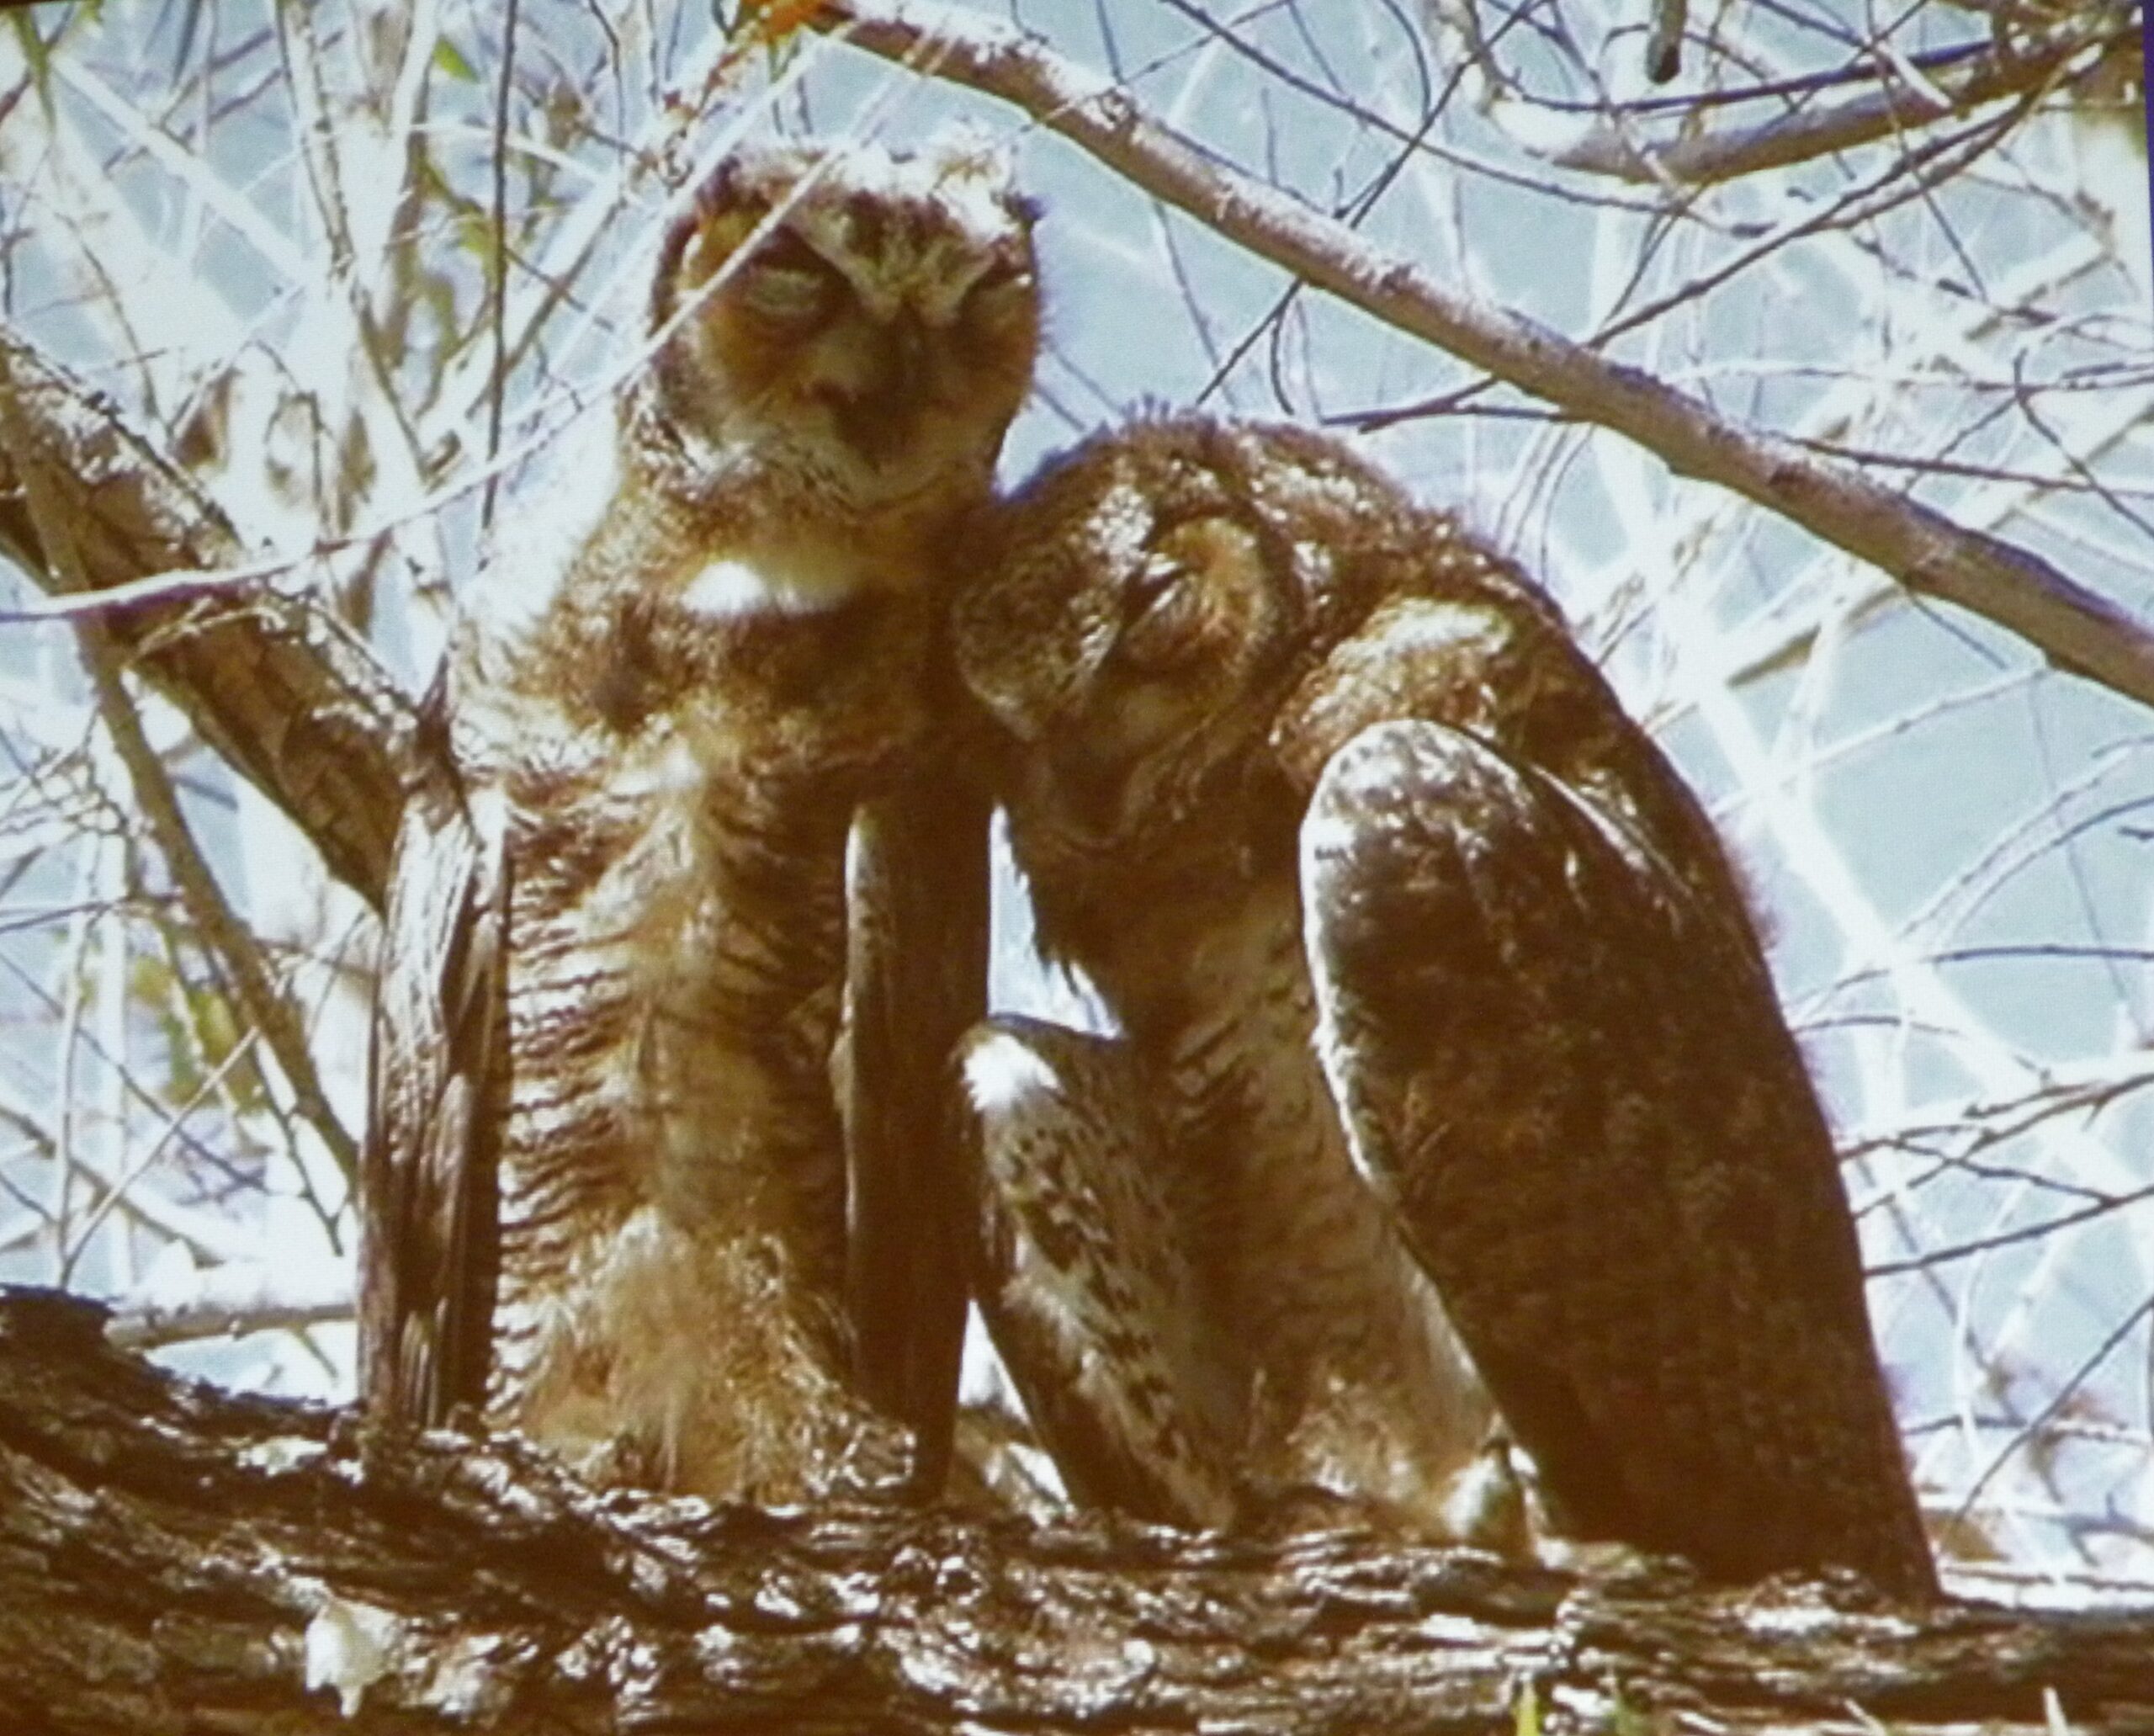 BS – Pair of owls